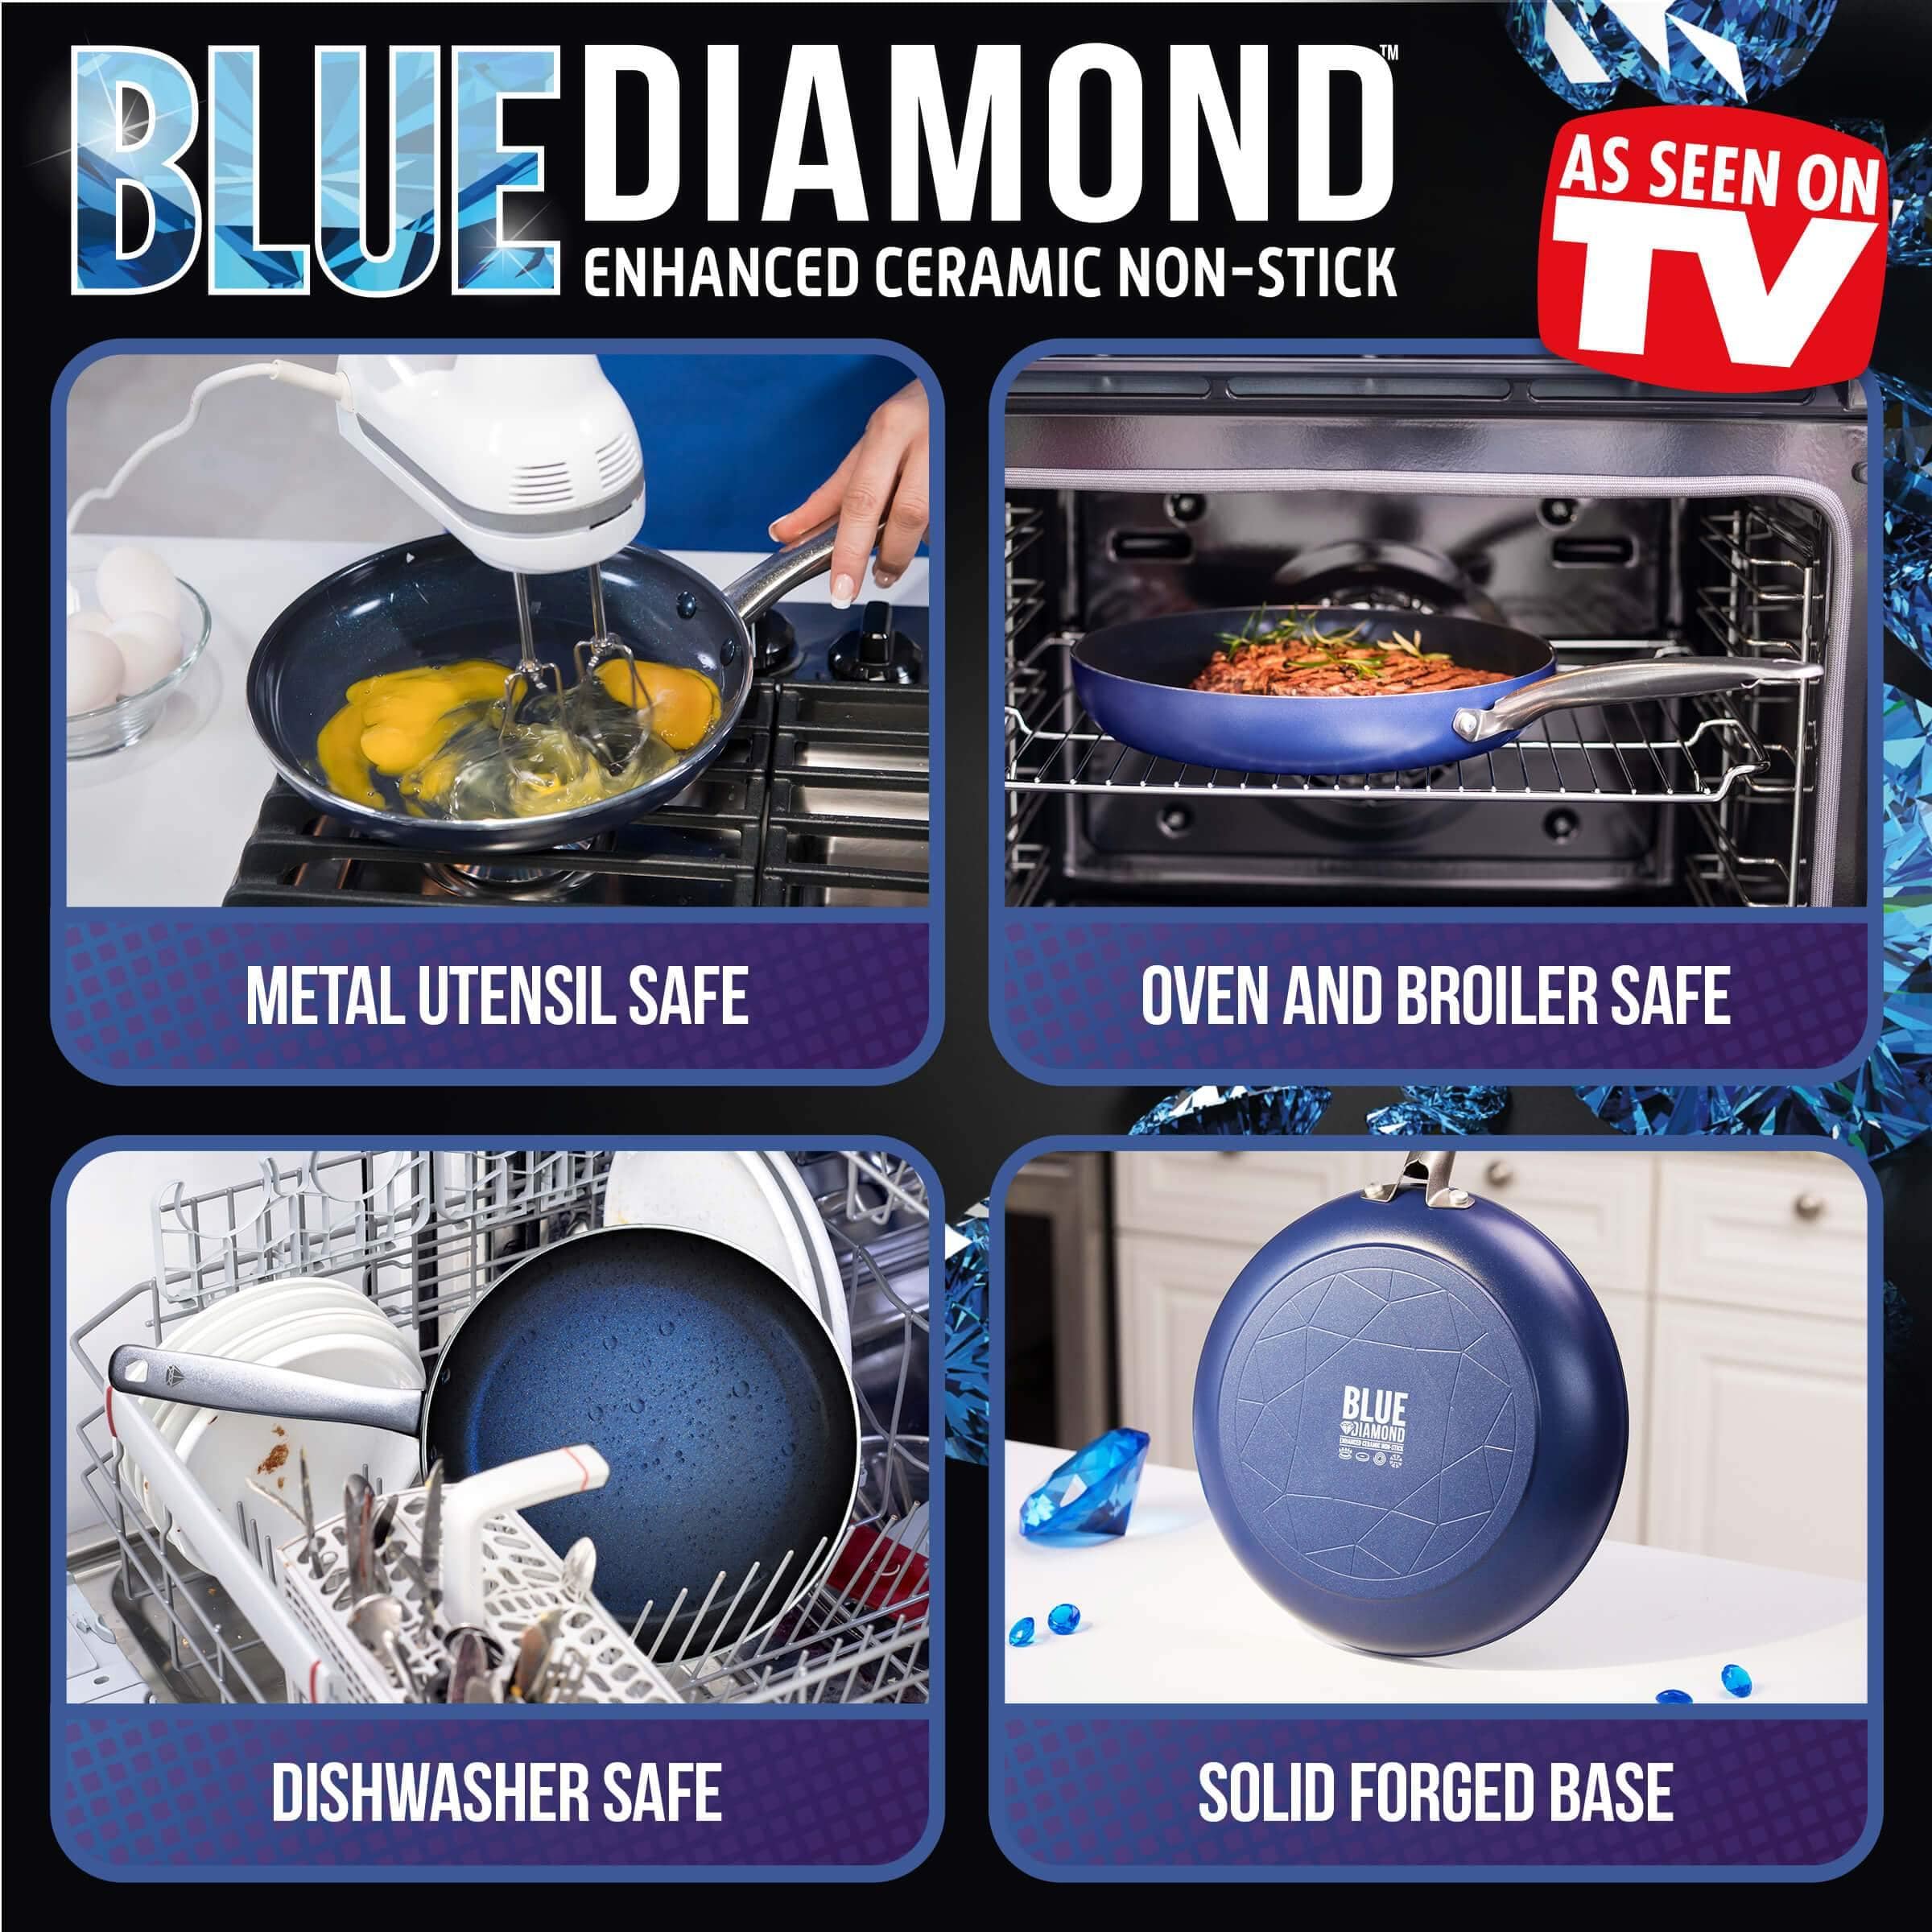 Blue Diamond 10-piece Enhanced Ceramic Nonstick Cookware Set As